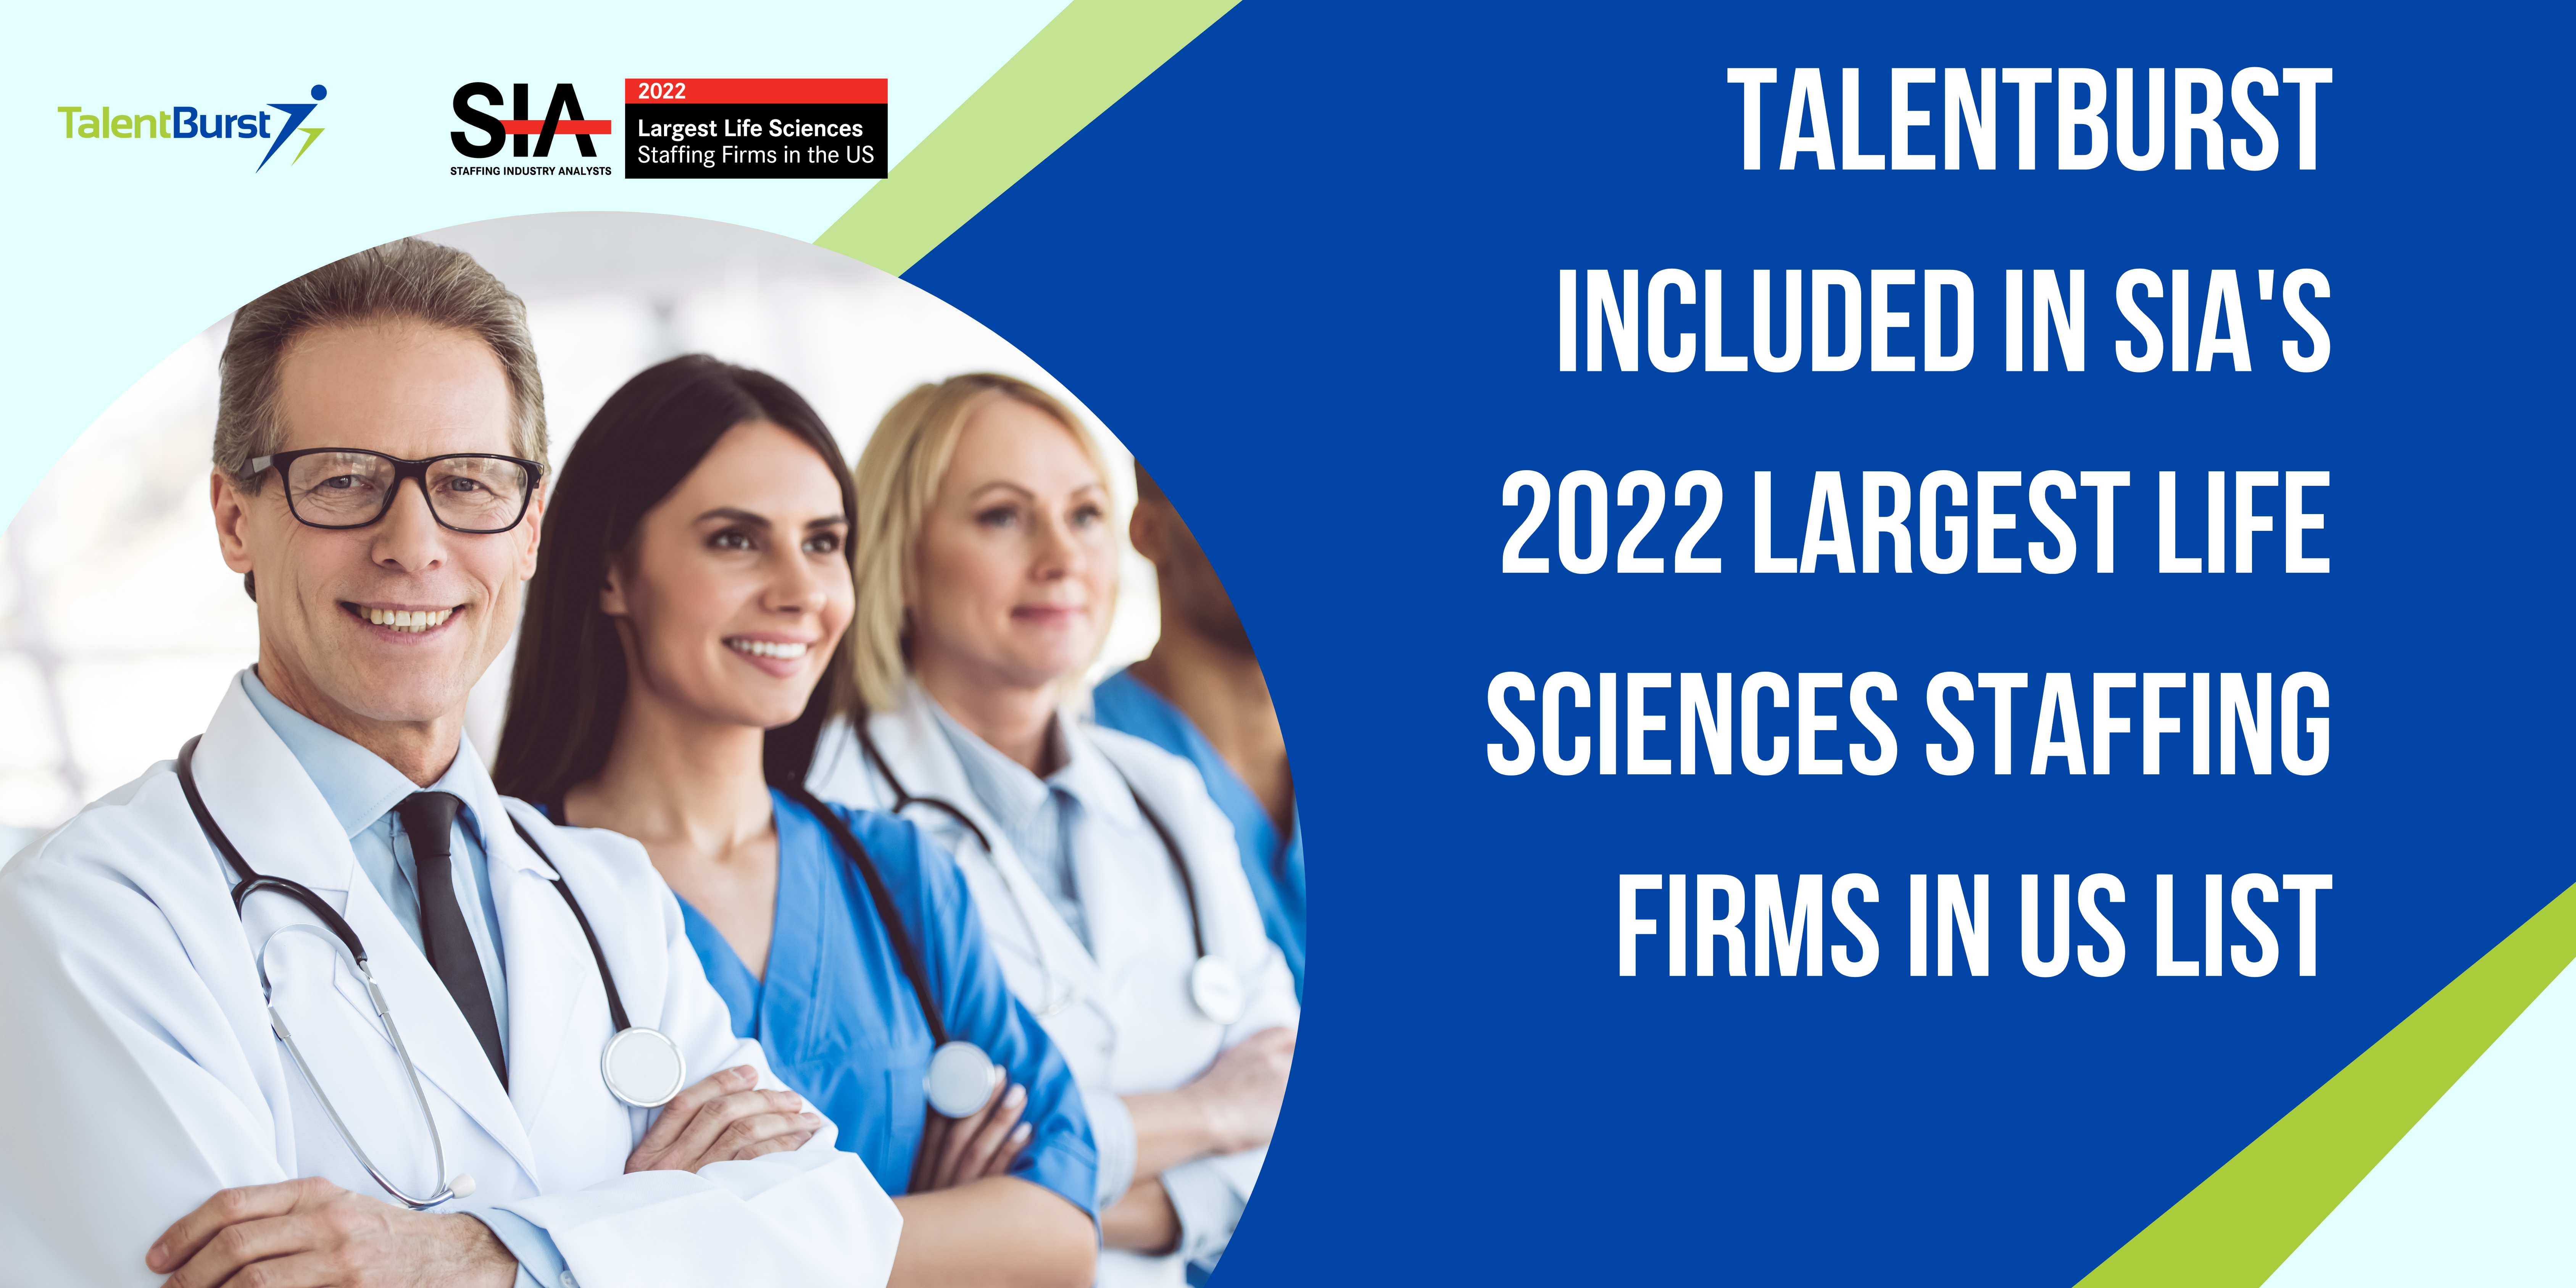 TalentBurst recognized on SIA 2022 Largest Life Sciences Staffing Firms US list